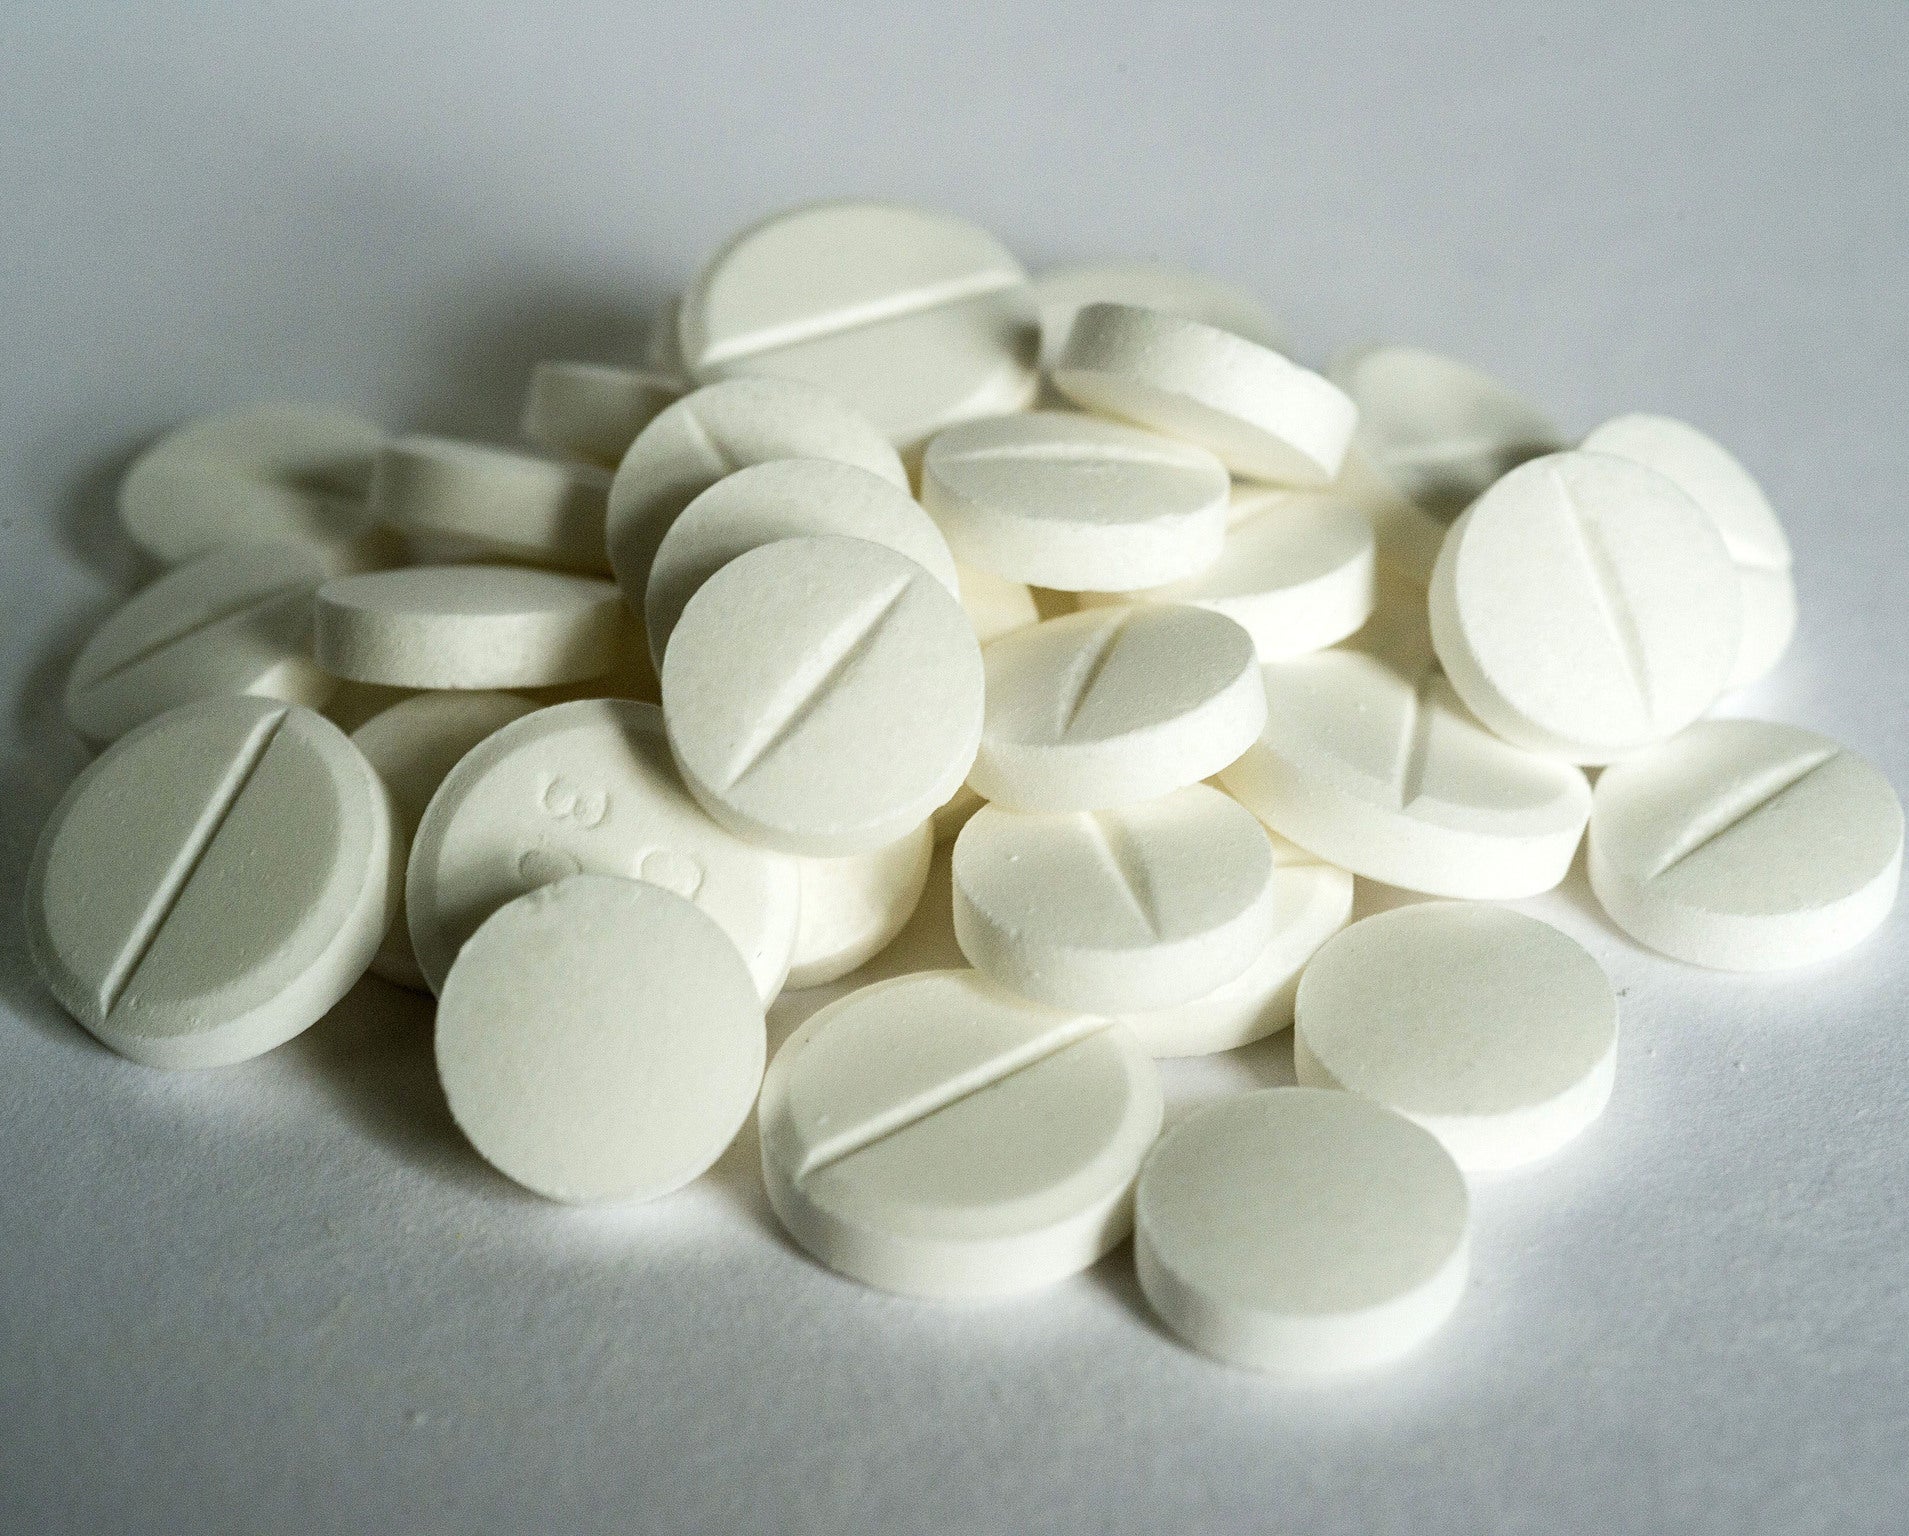 Aspirin blocks the production of PGE2